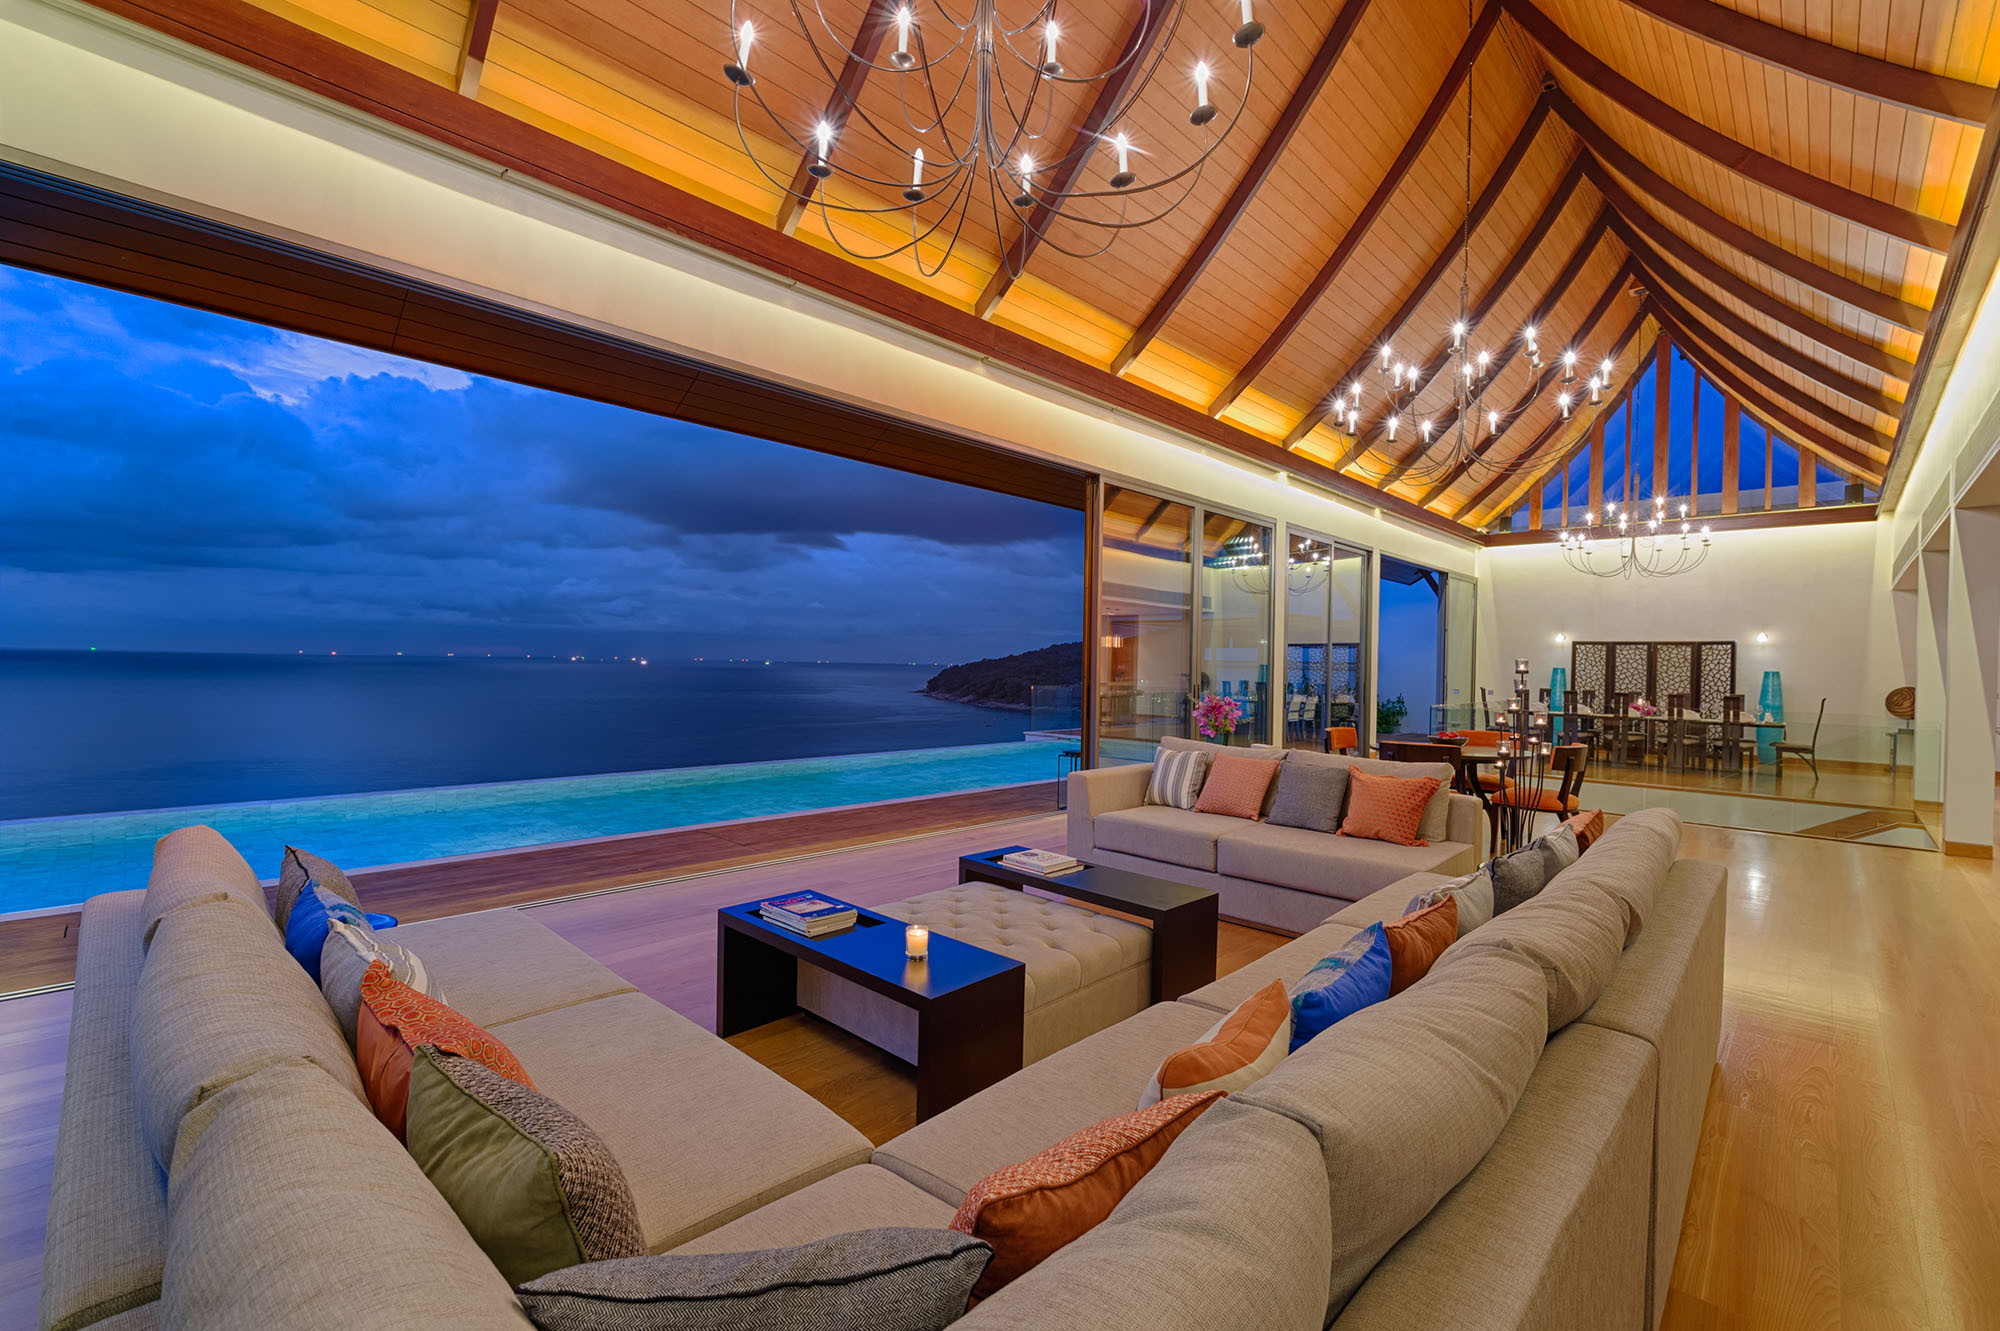 5 bedroom villa with magical sea views in Nai thon beach